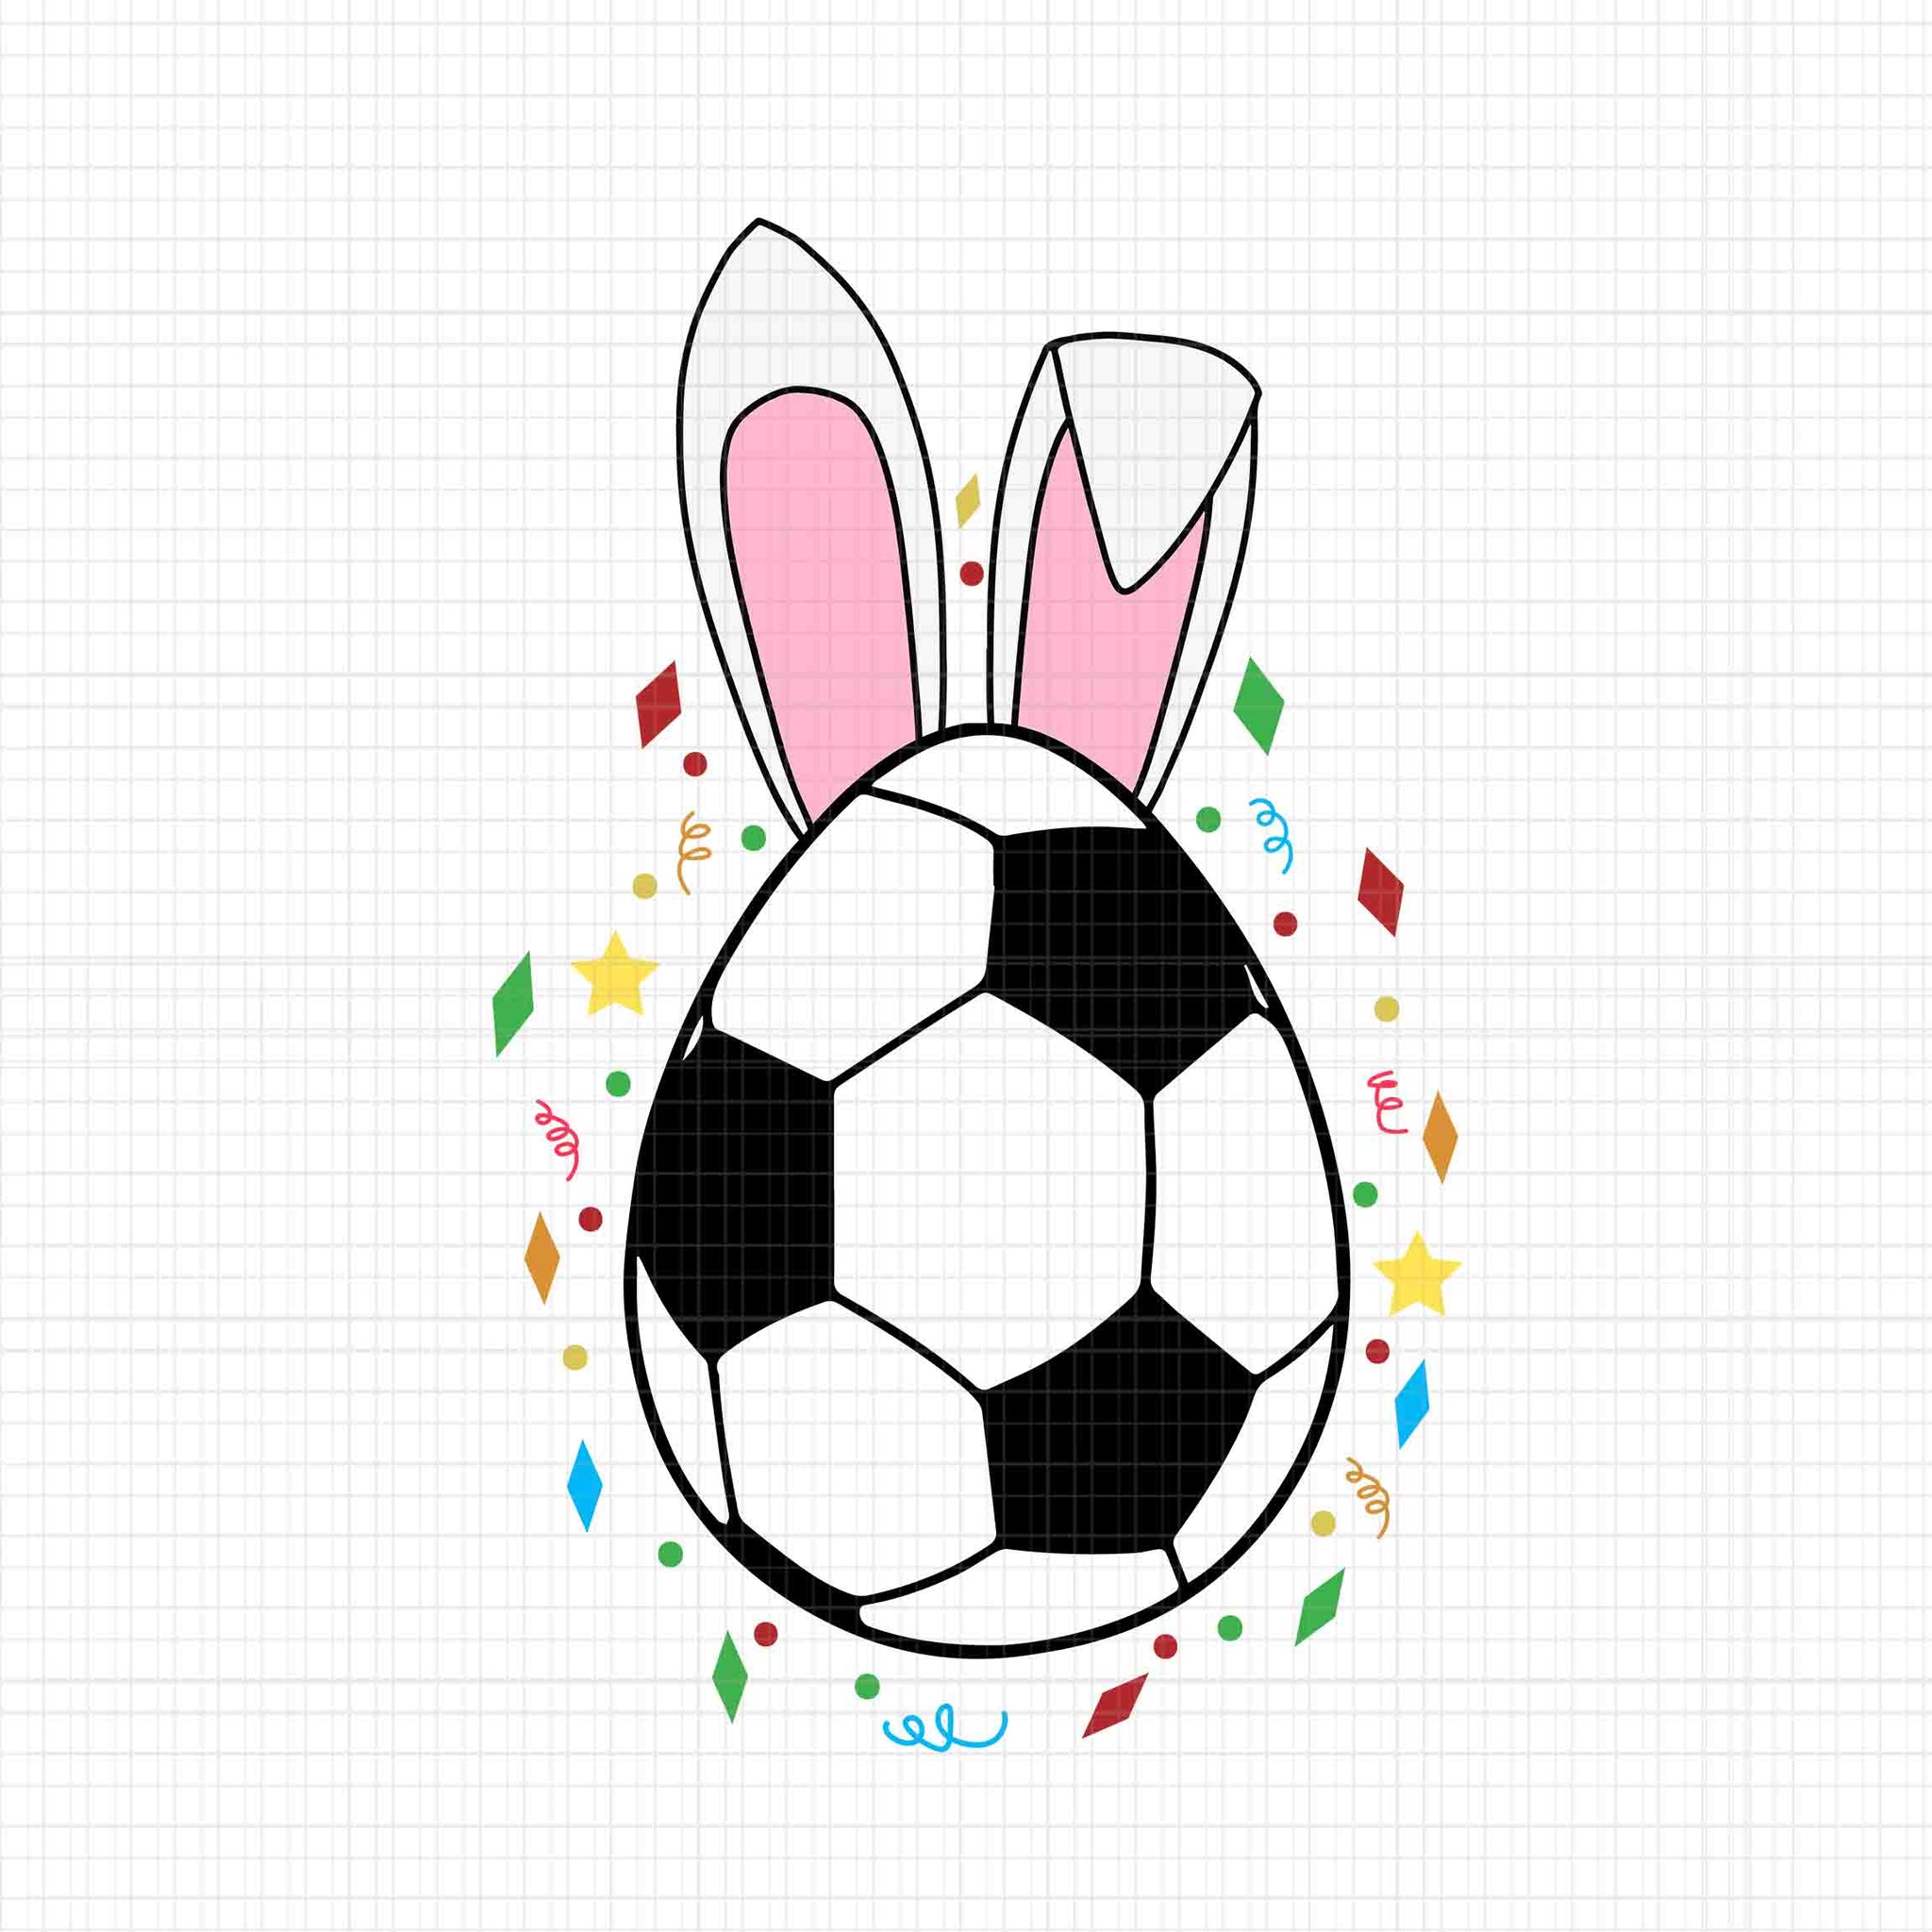 Baby Yoda Happy Easter SVG, Easter Egg SVG, Easter Bunny